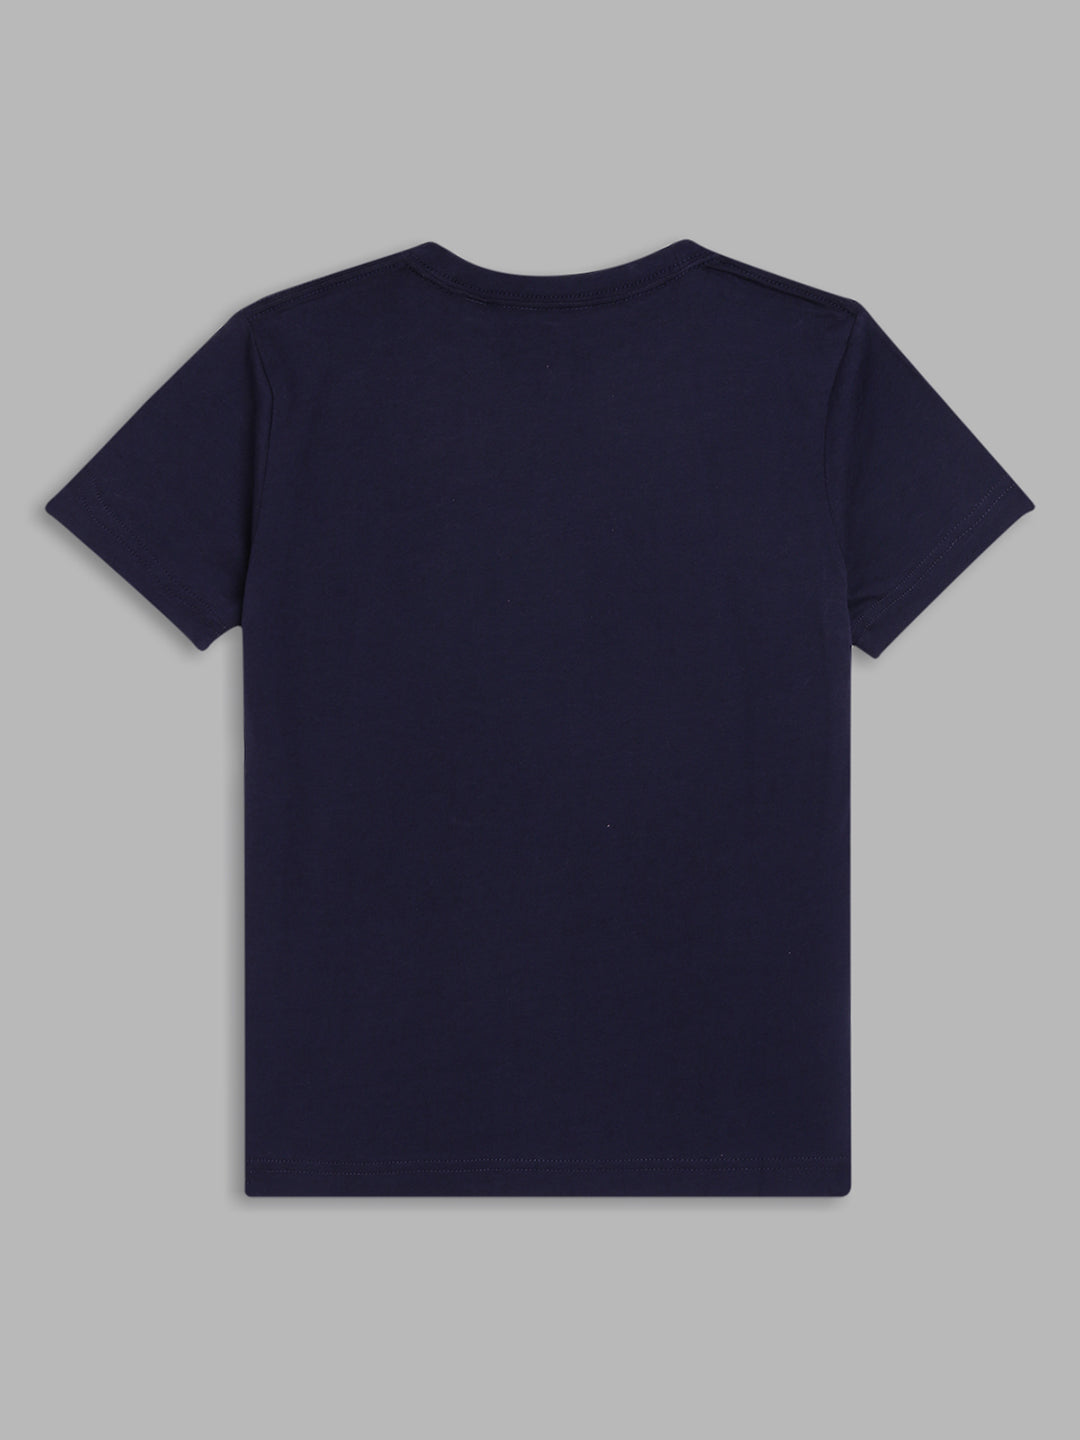 Gant Kids Navy Logo Regular Fit T-Shirt